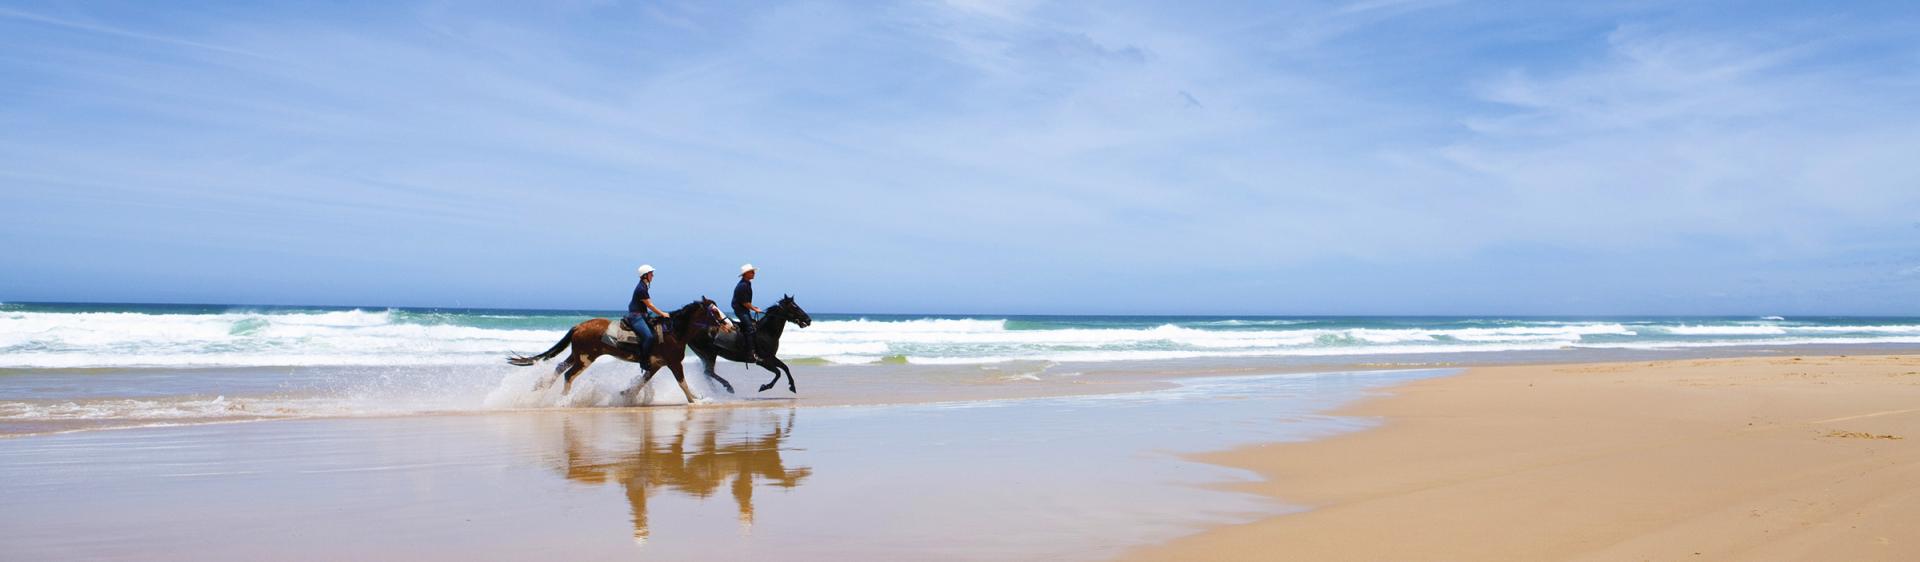 Beach Horse Riding, Port Stephens